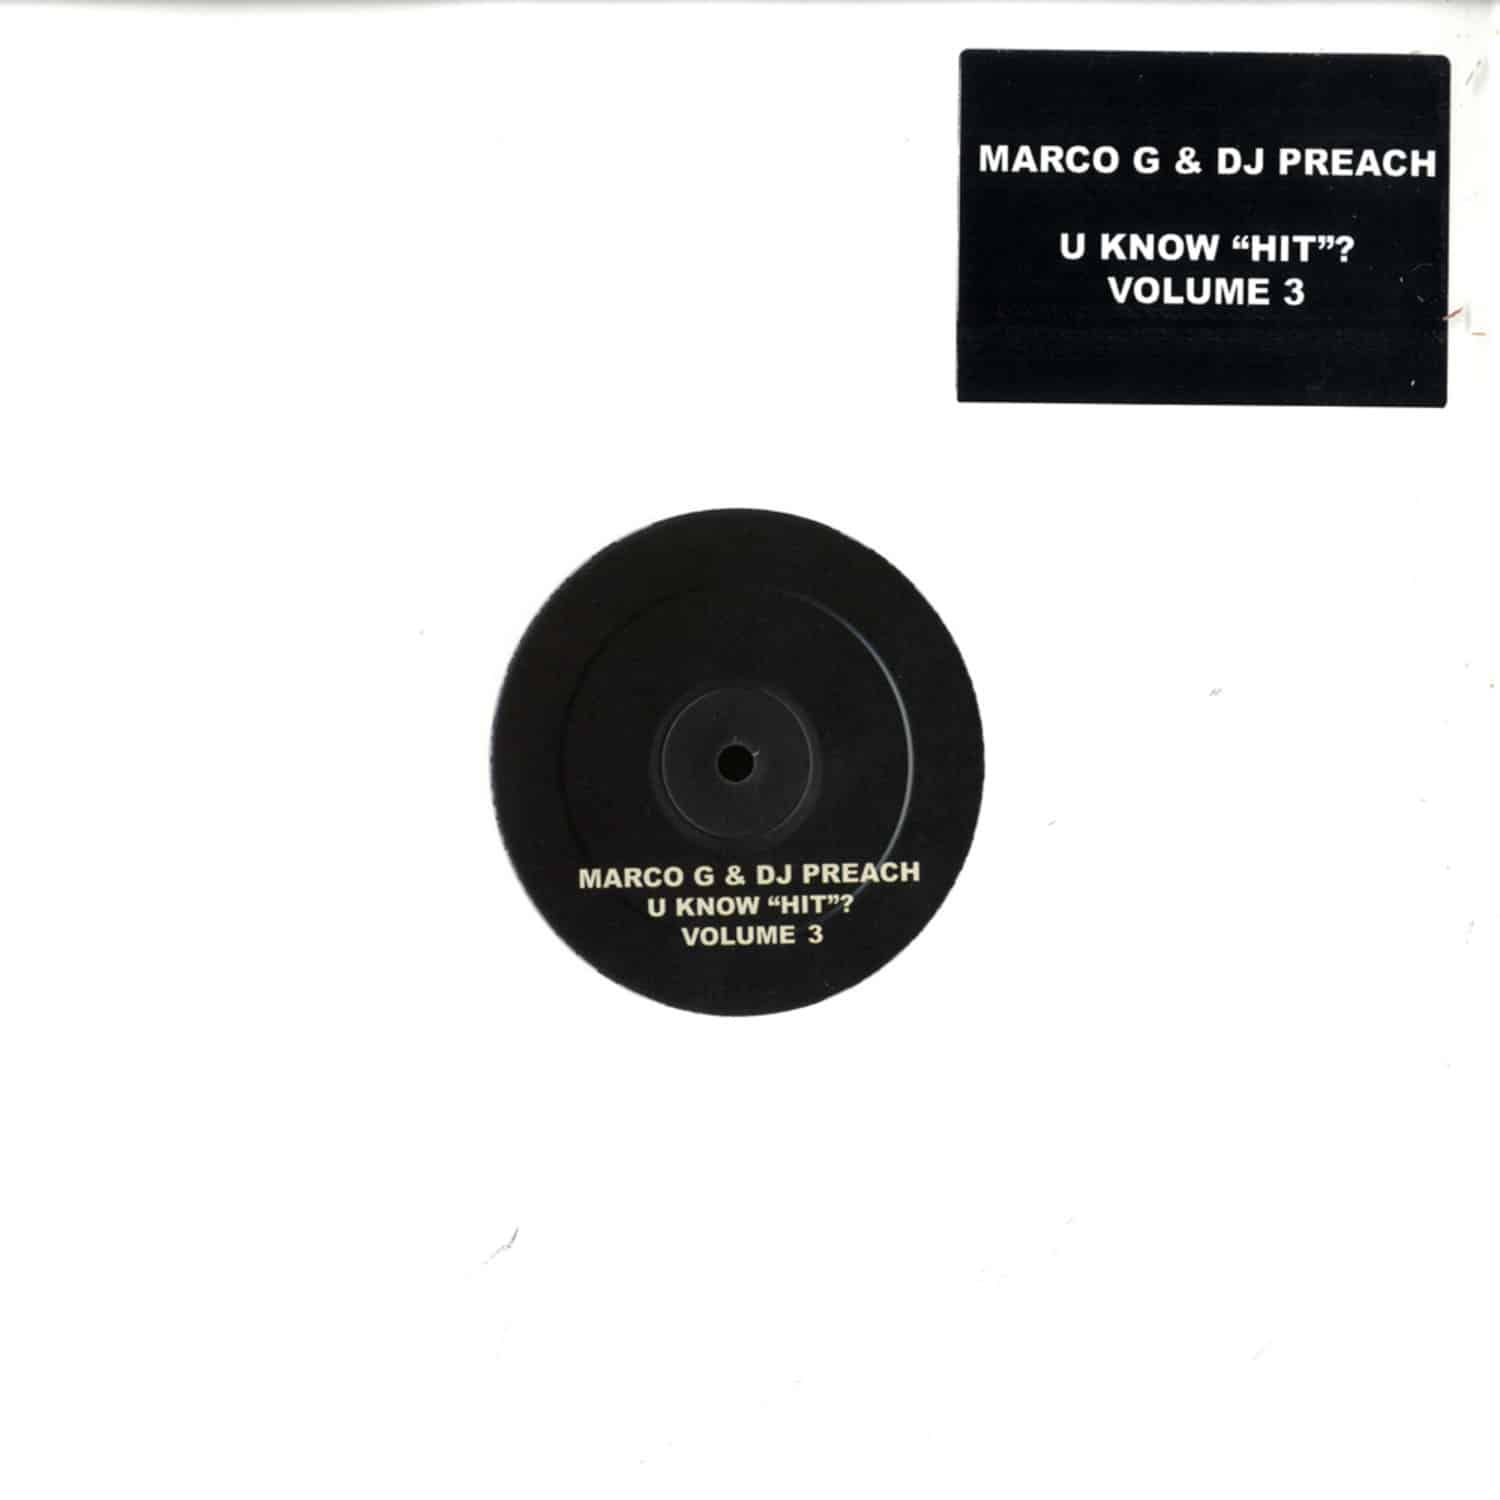 Marco G & DJ Preach - U KNOW HIT ? VOLUME 3